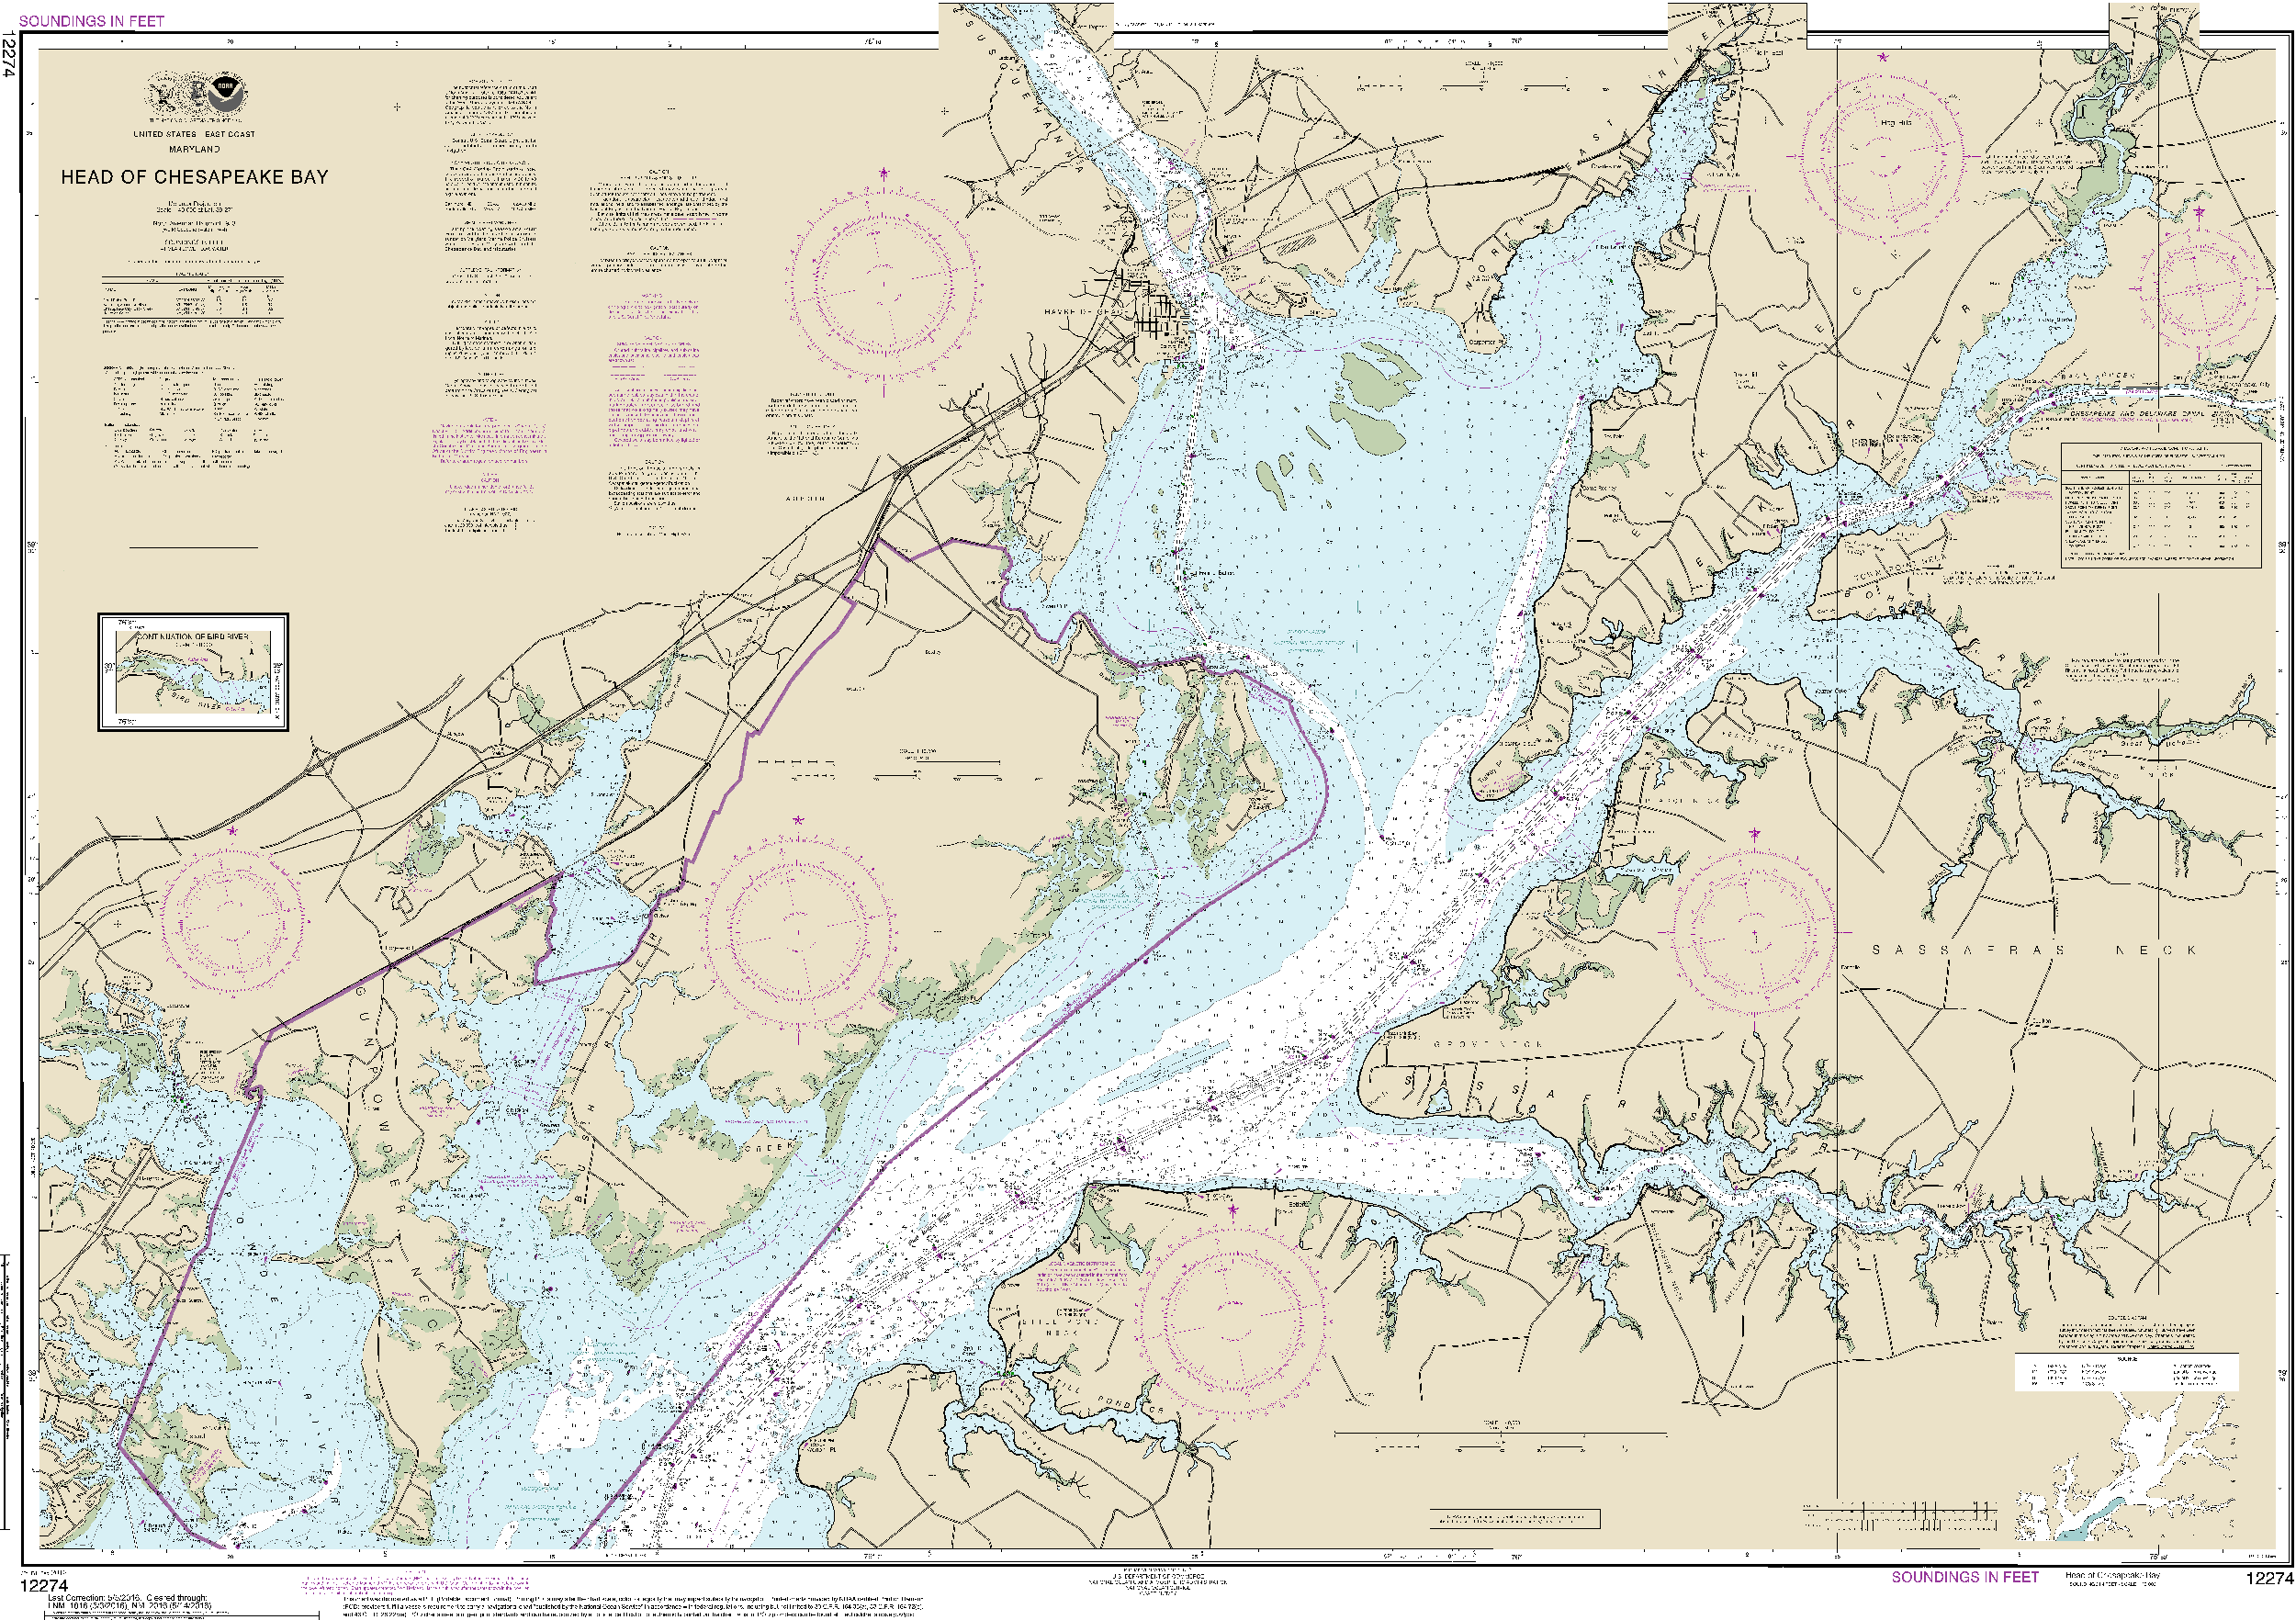 NOAA Nautical Chart 12274: Head of Chesapeake Bay